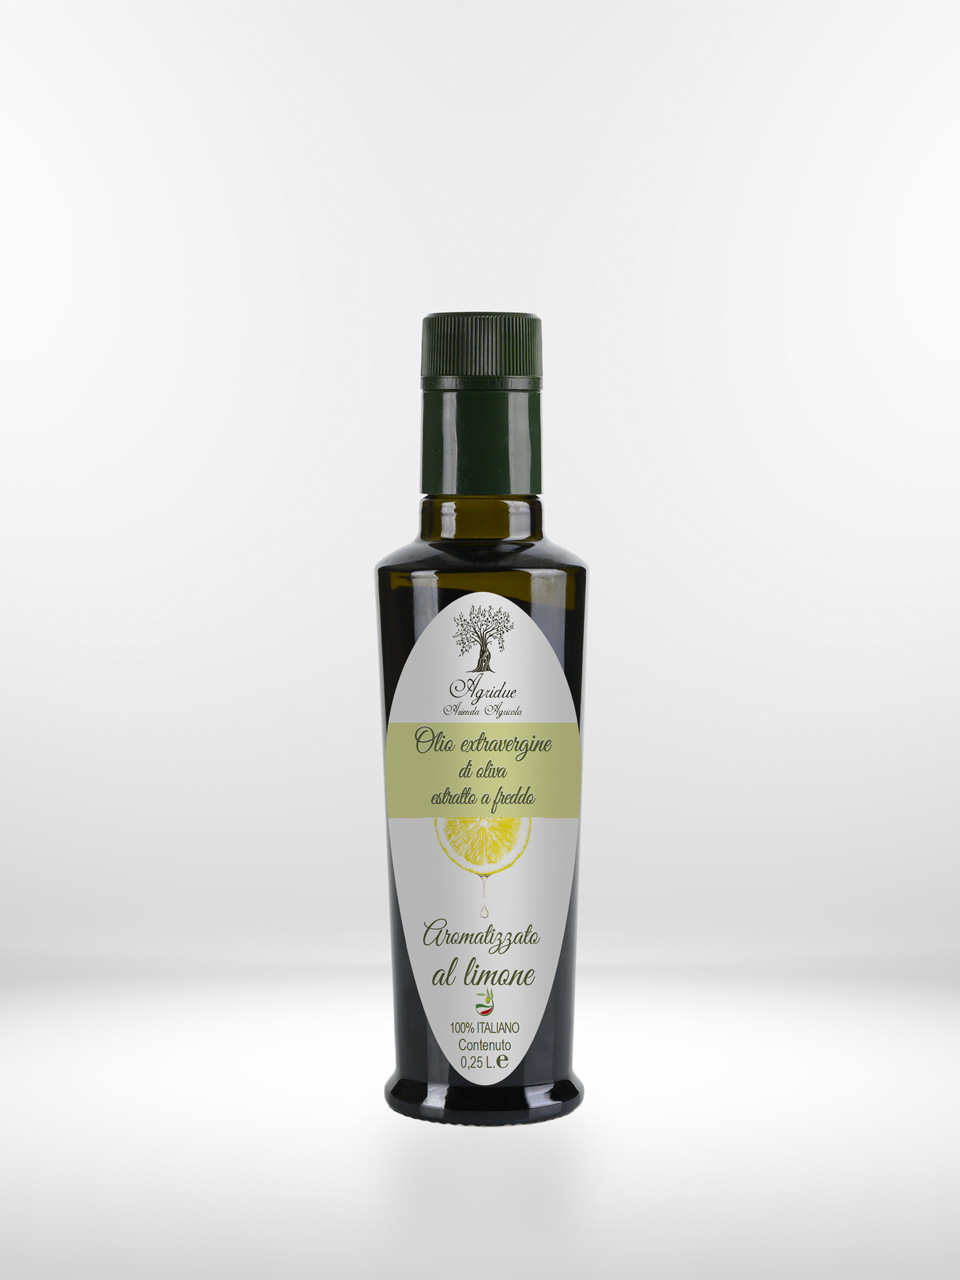 A bottle of extra virgin olive oil on a white background. Lemon-flavored oil, fresh Mediterranean.